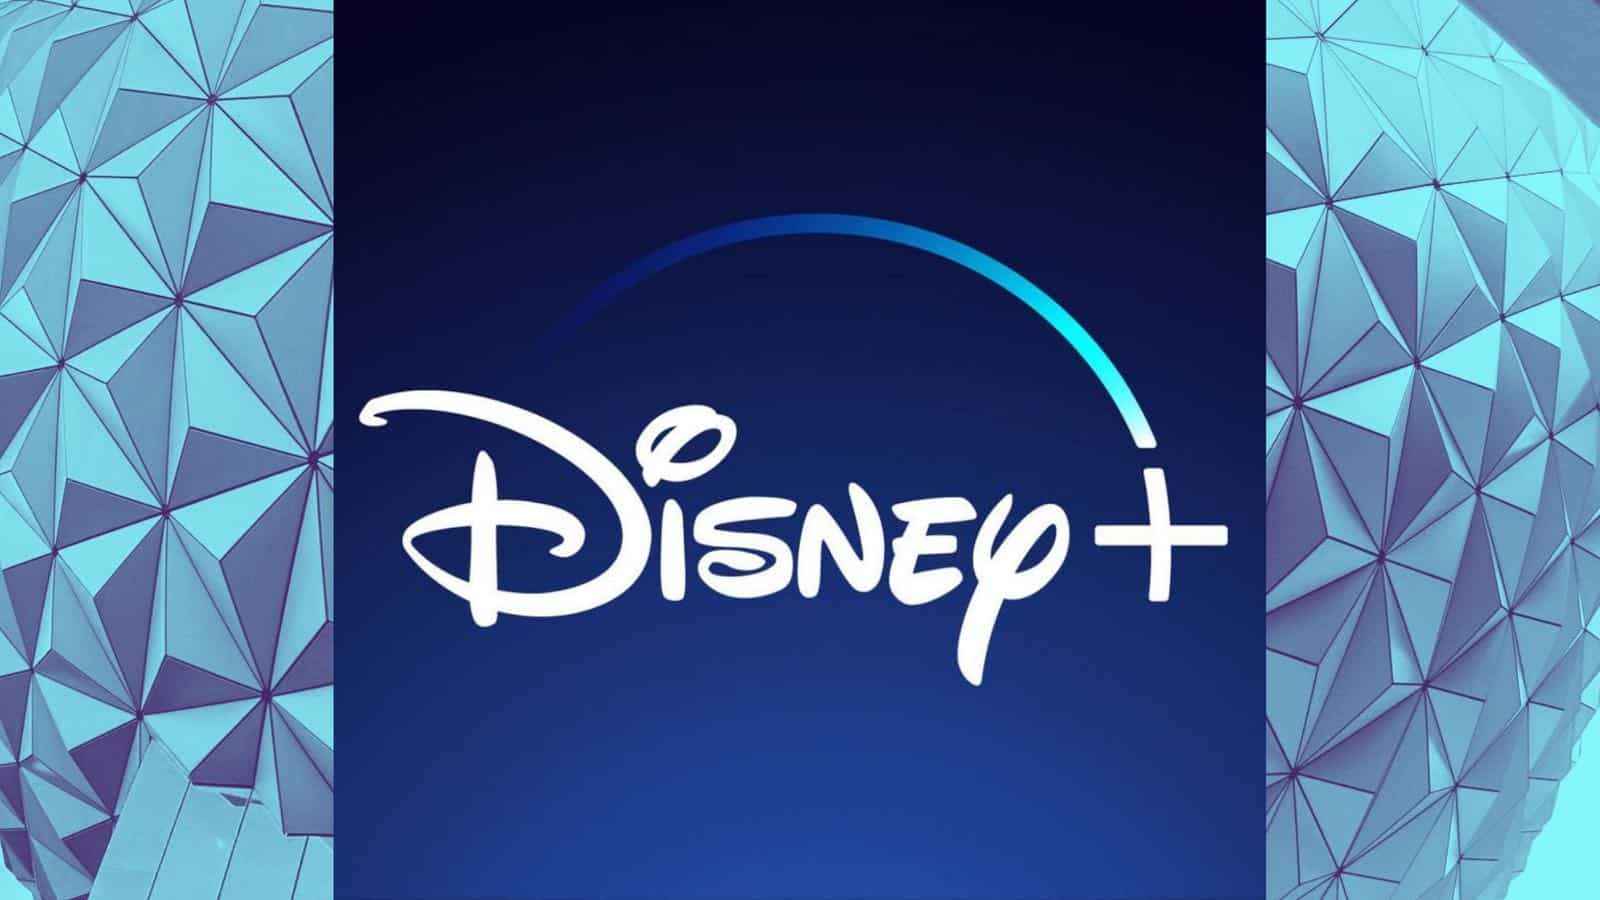 Disney+ Discount at Disney World